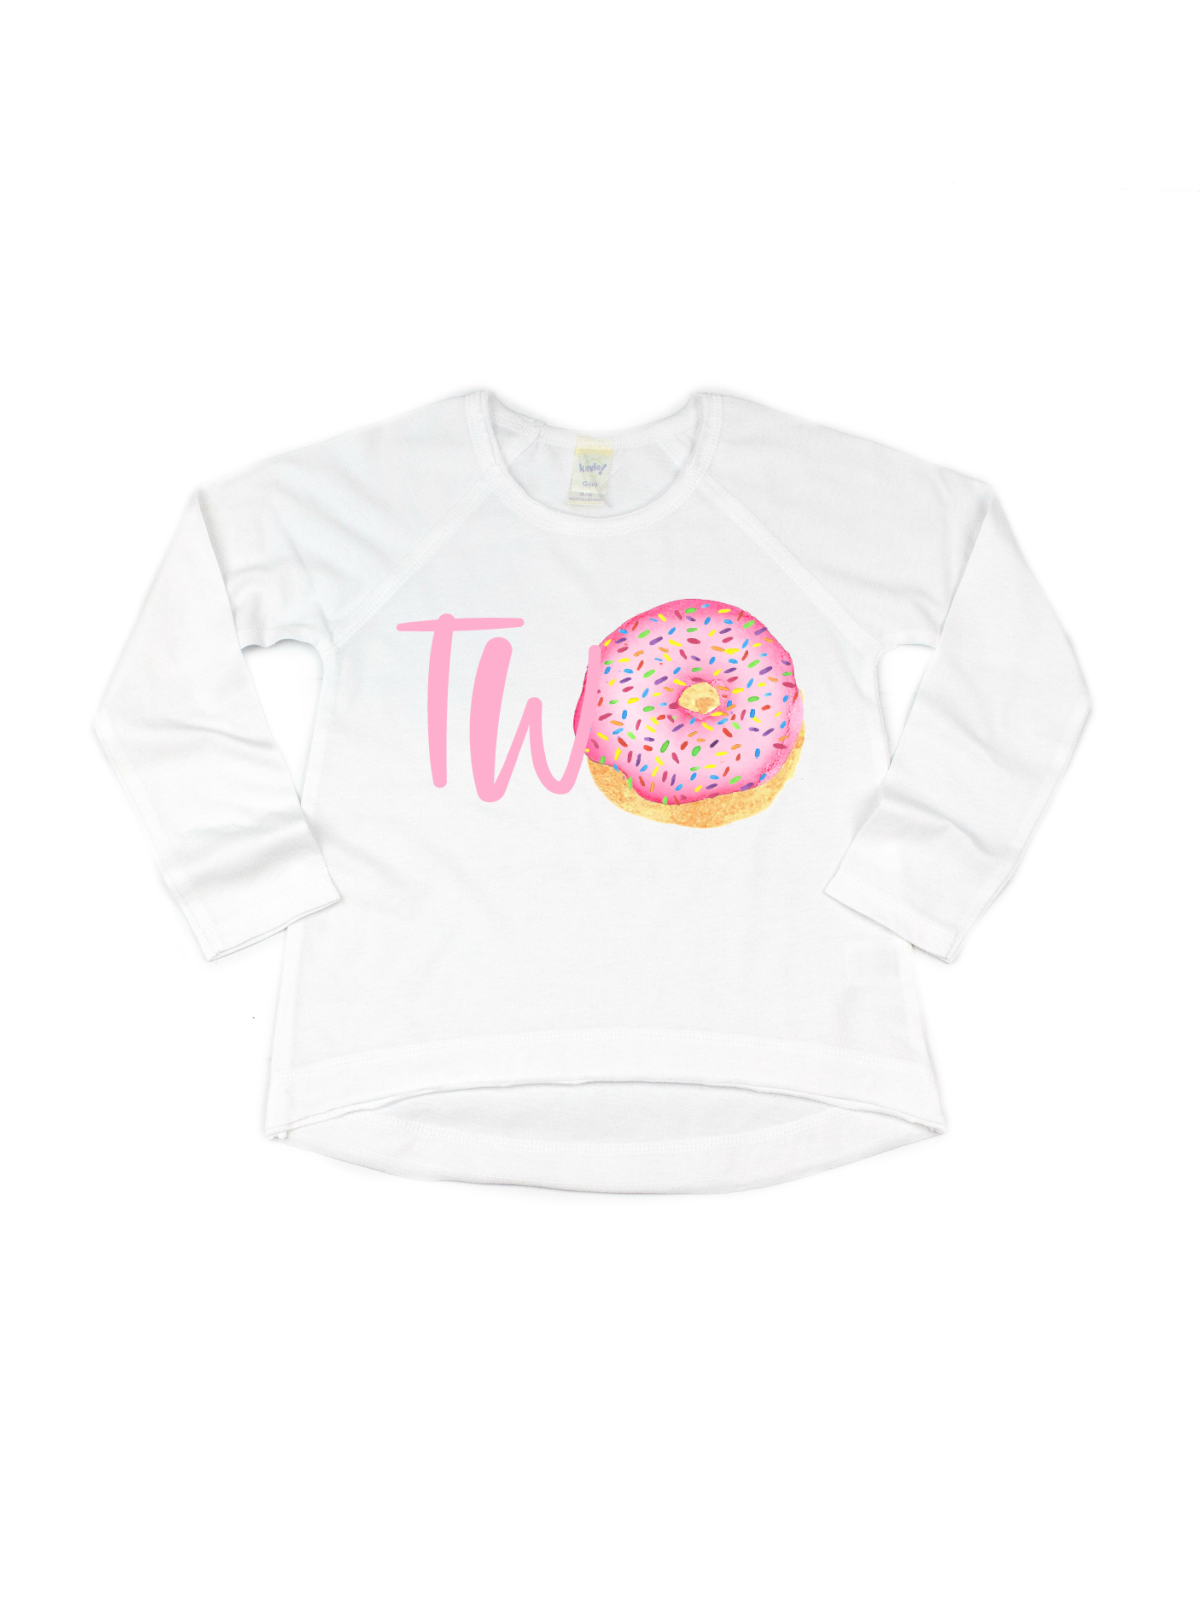 TWO donut sprinkles birthday shirt